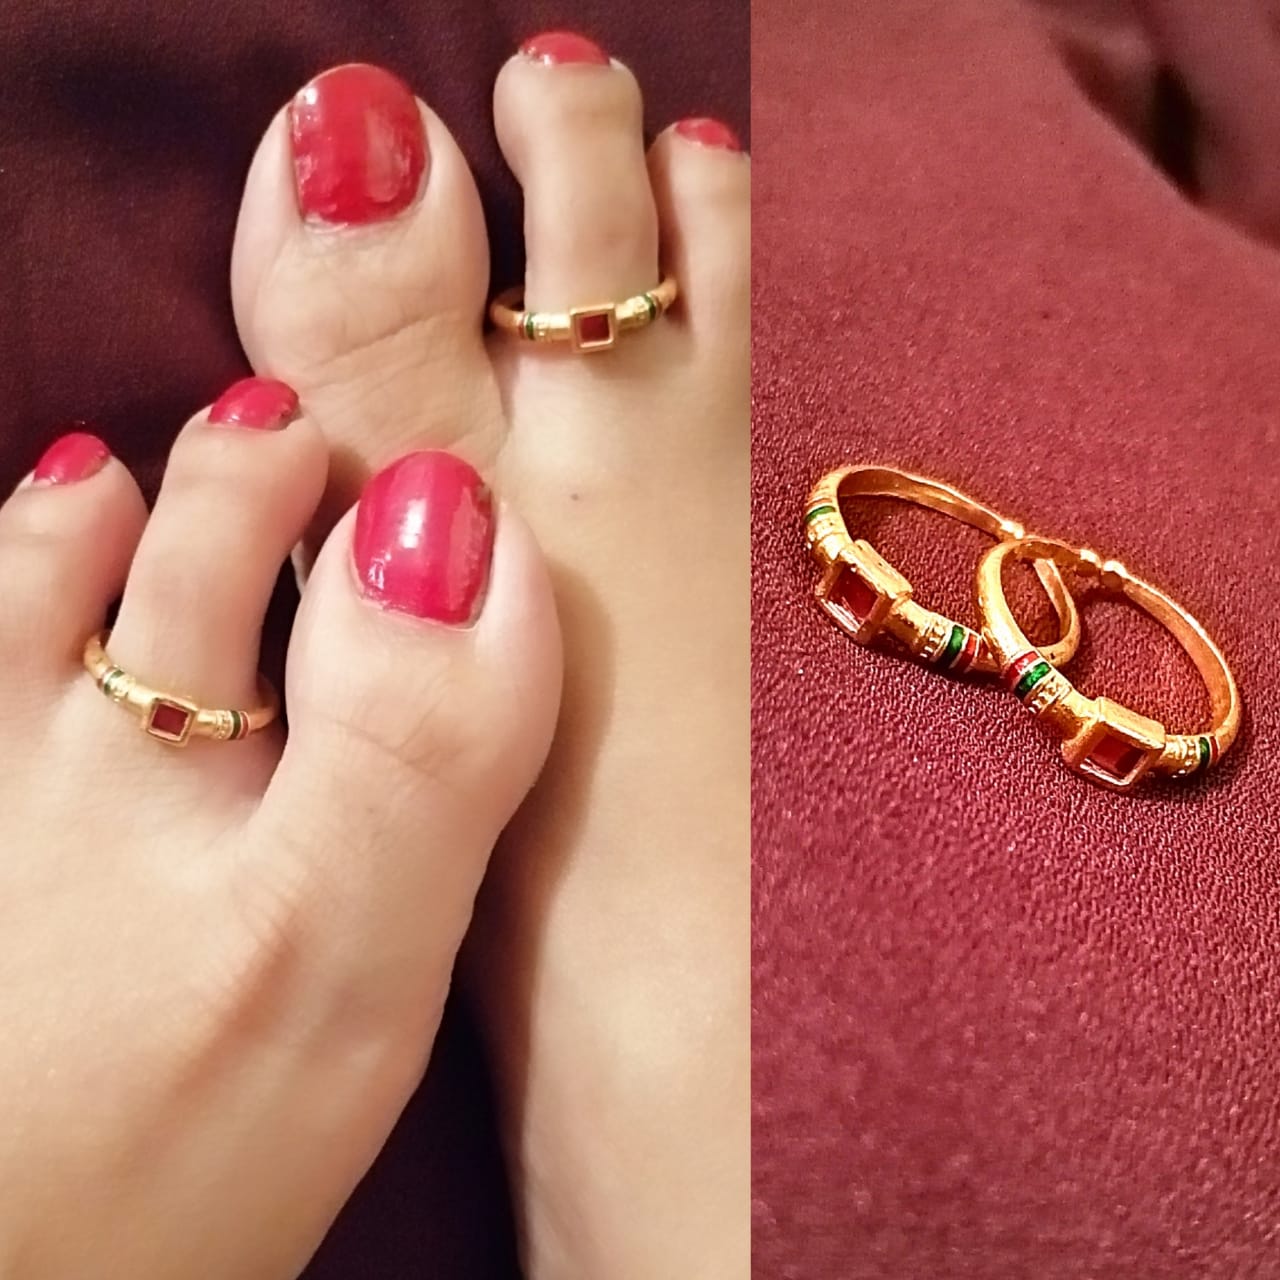 Gold toe-rings - ABDESIGNS - 3074985 | Gold toe rings, Toe rings, Toe ring  designs